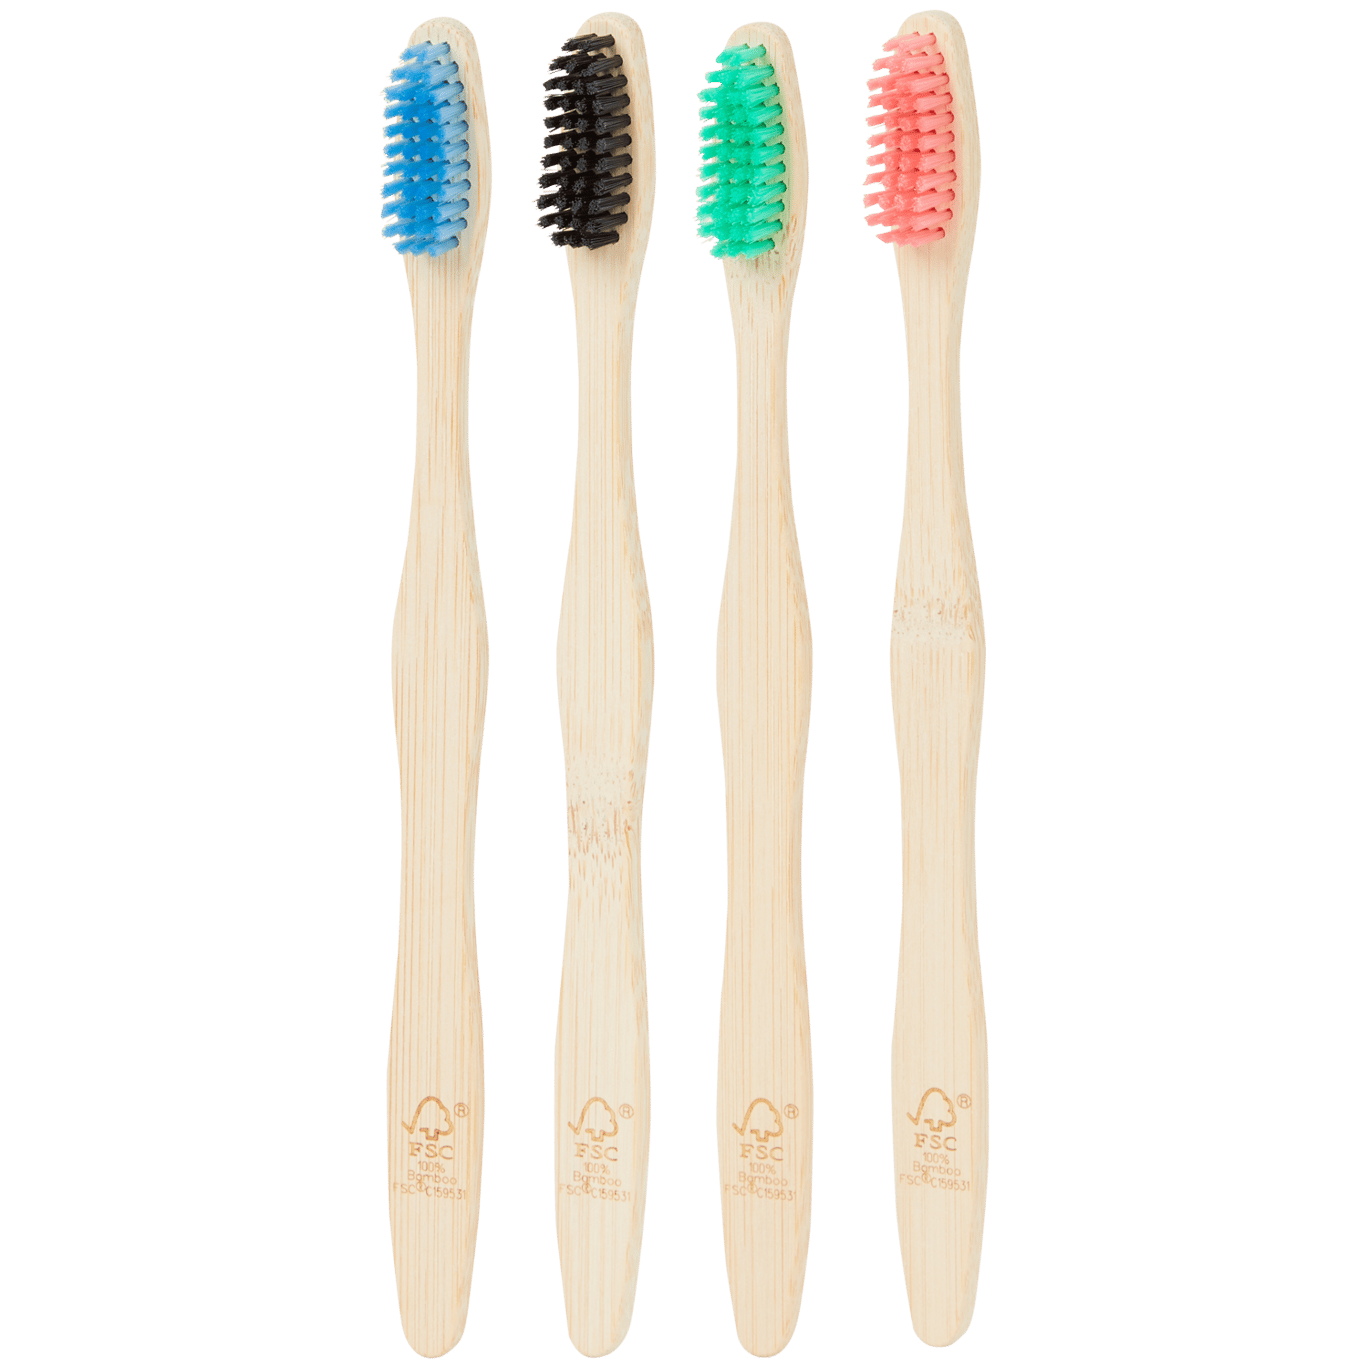 Spanning waardigheid haar Bamboe tandenborstels | Action.com